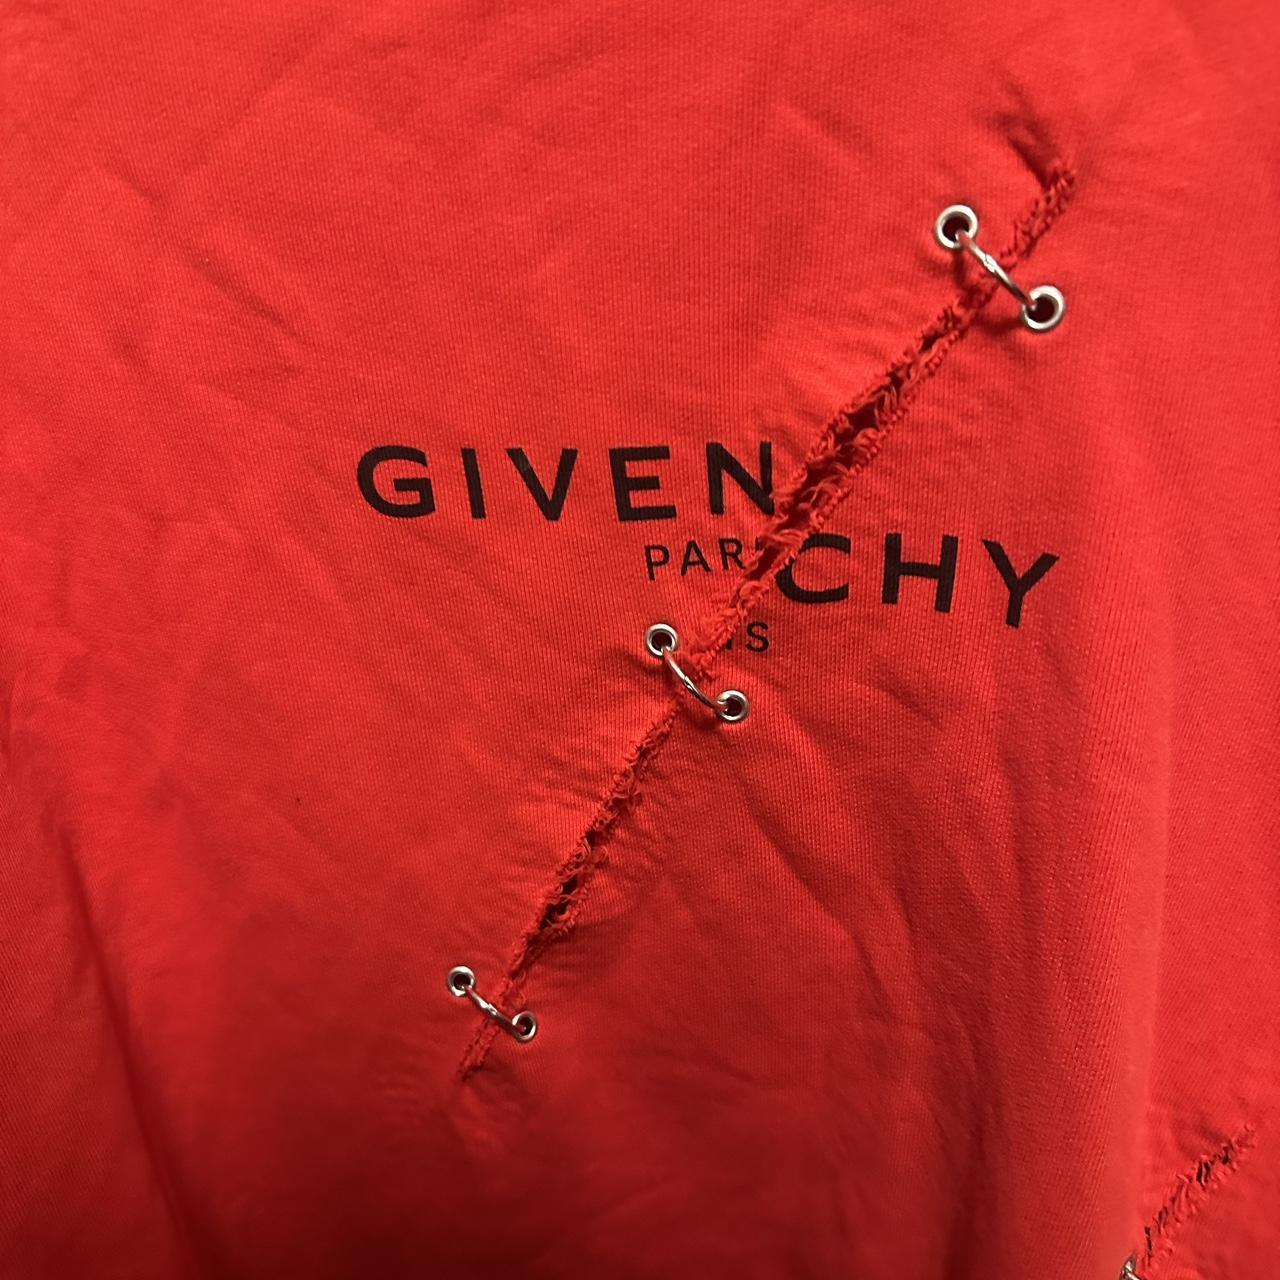 Givenchy Men's Sweatshirt | Depop